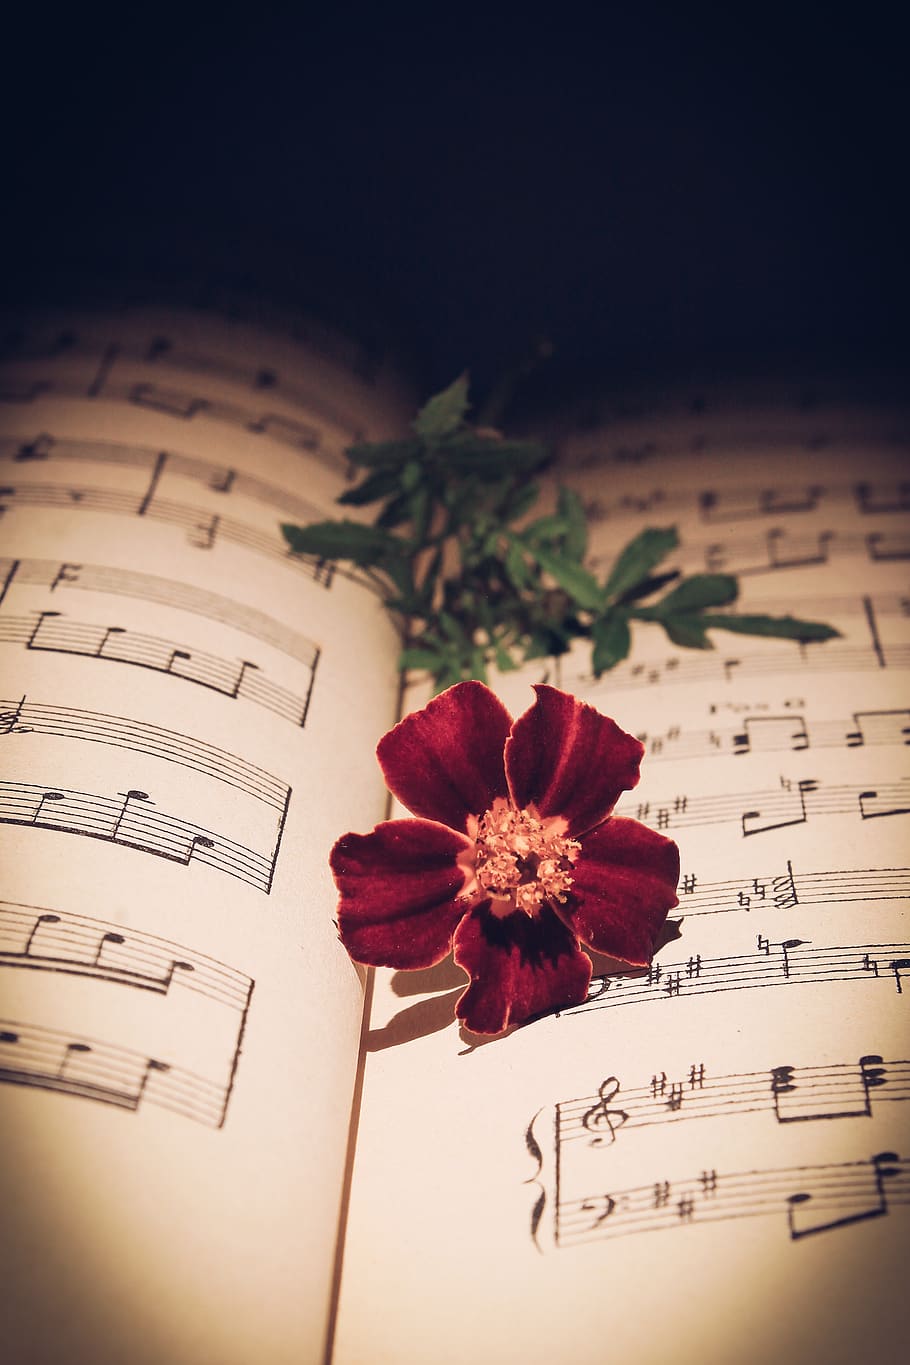 musical note, red rose, rose, red flower, flower, romantic, life, nature, carnation, manuscript